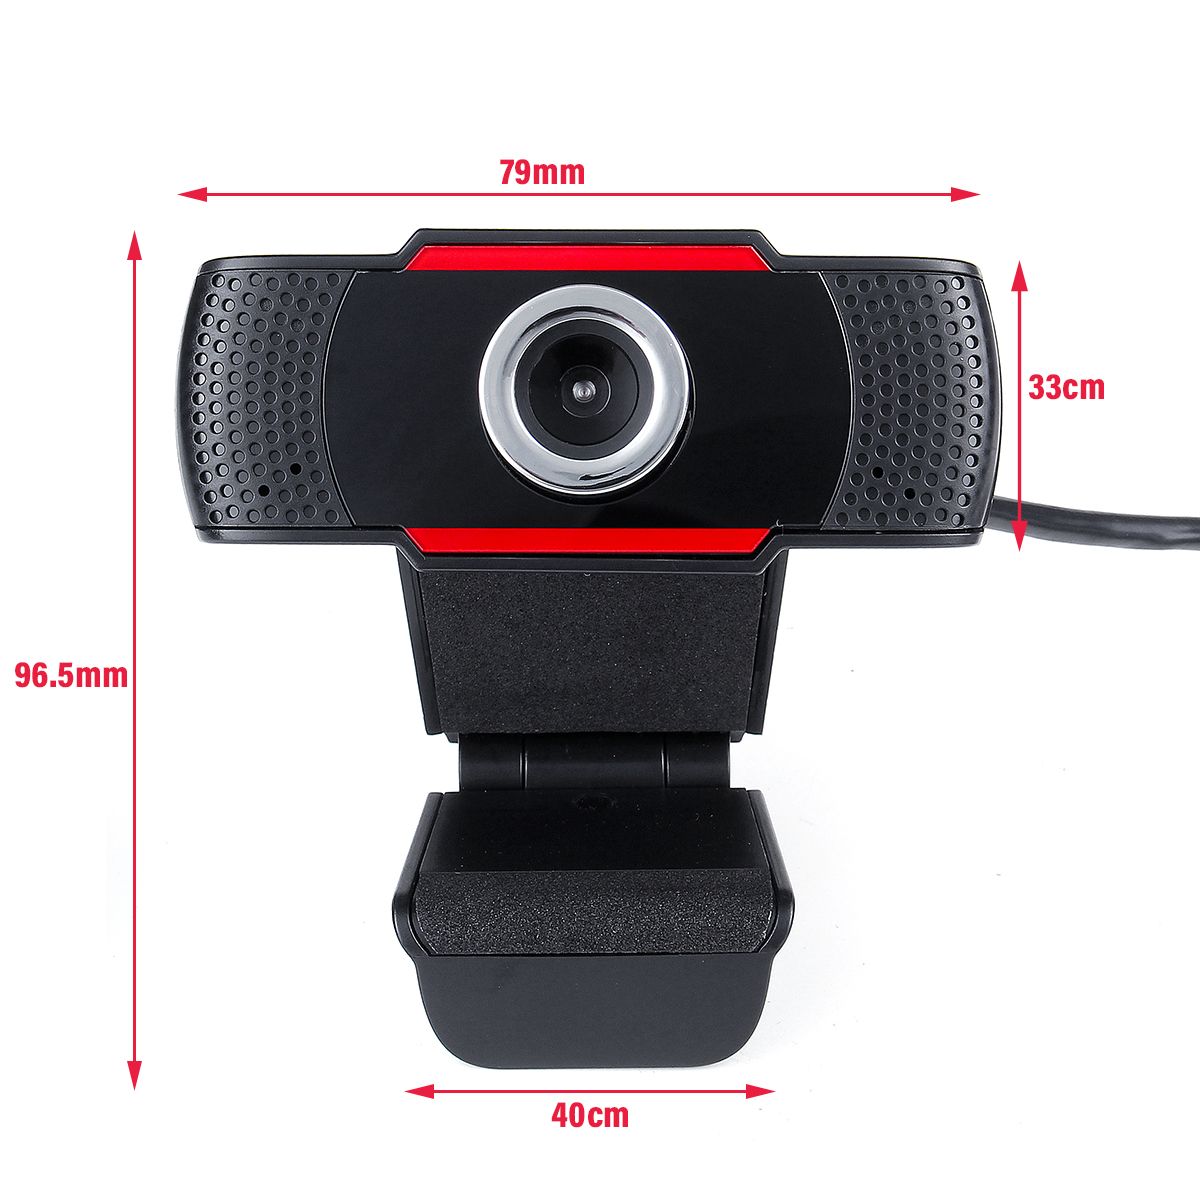 X21-1080P-HD-Webcam-CMOS-USB20-Web-Camera-Built-in-Microphone-Camera-for-Desktop-Computer-Notebook-P-1769958